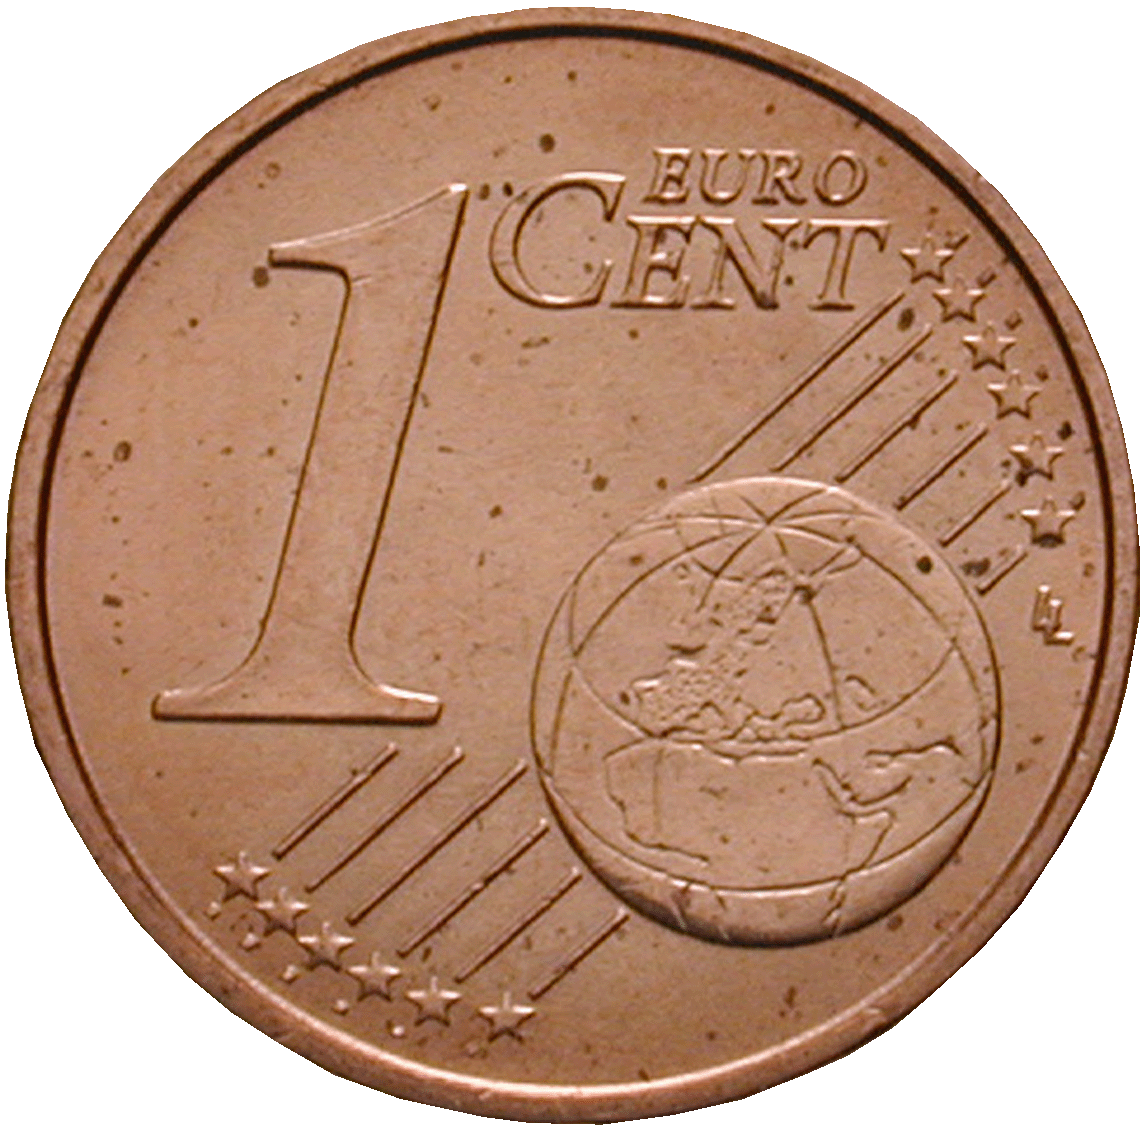 Republik Italien, 1 Eurocent 2002 (reverse)